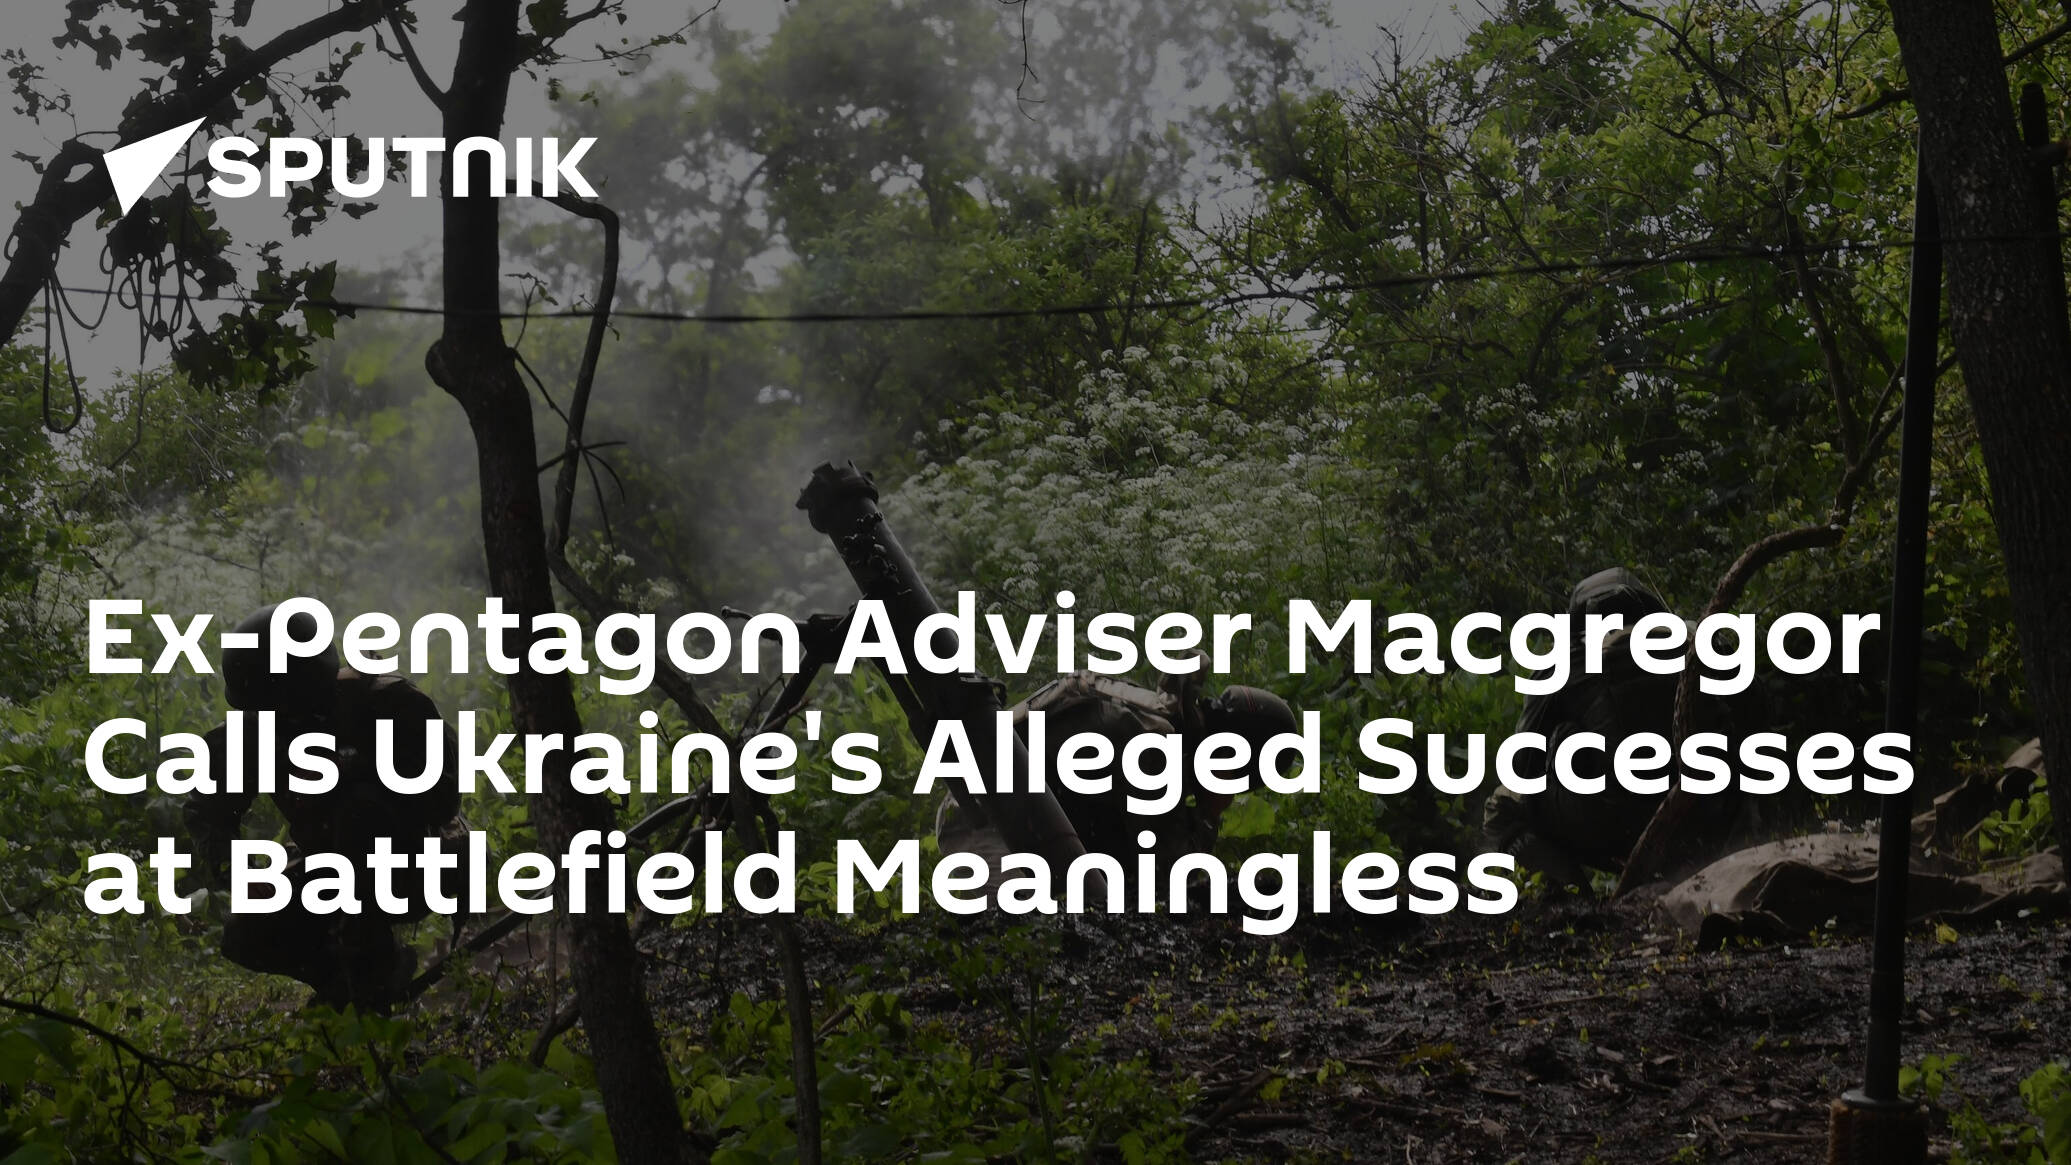 Ex-Pentagon Adviser Macgregor Calls Ukraine's Alleged Successes at Battlefield Meaningless